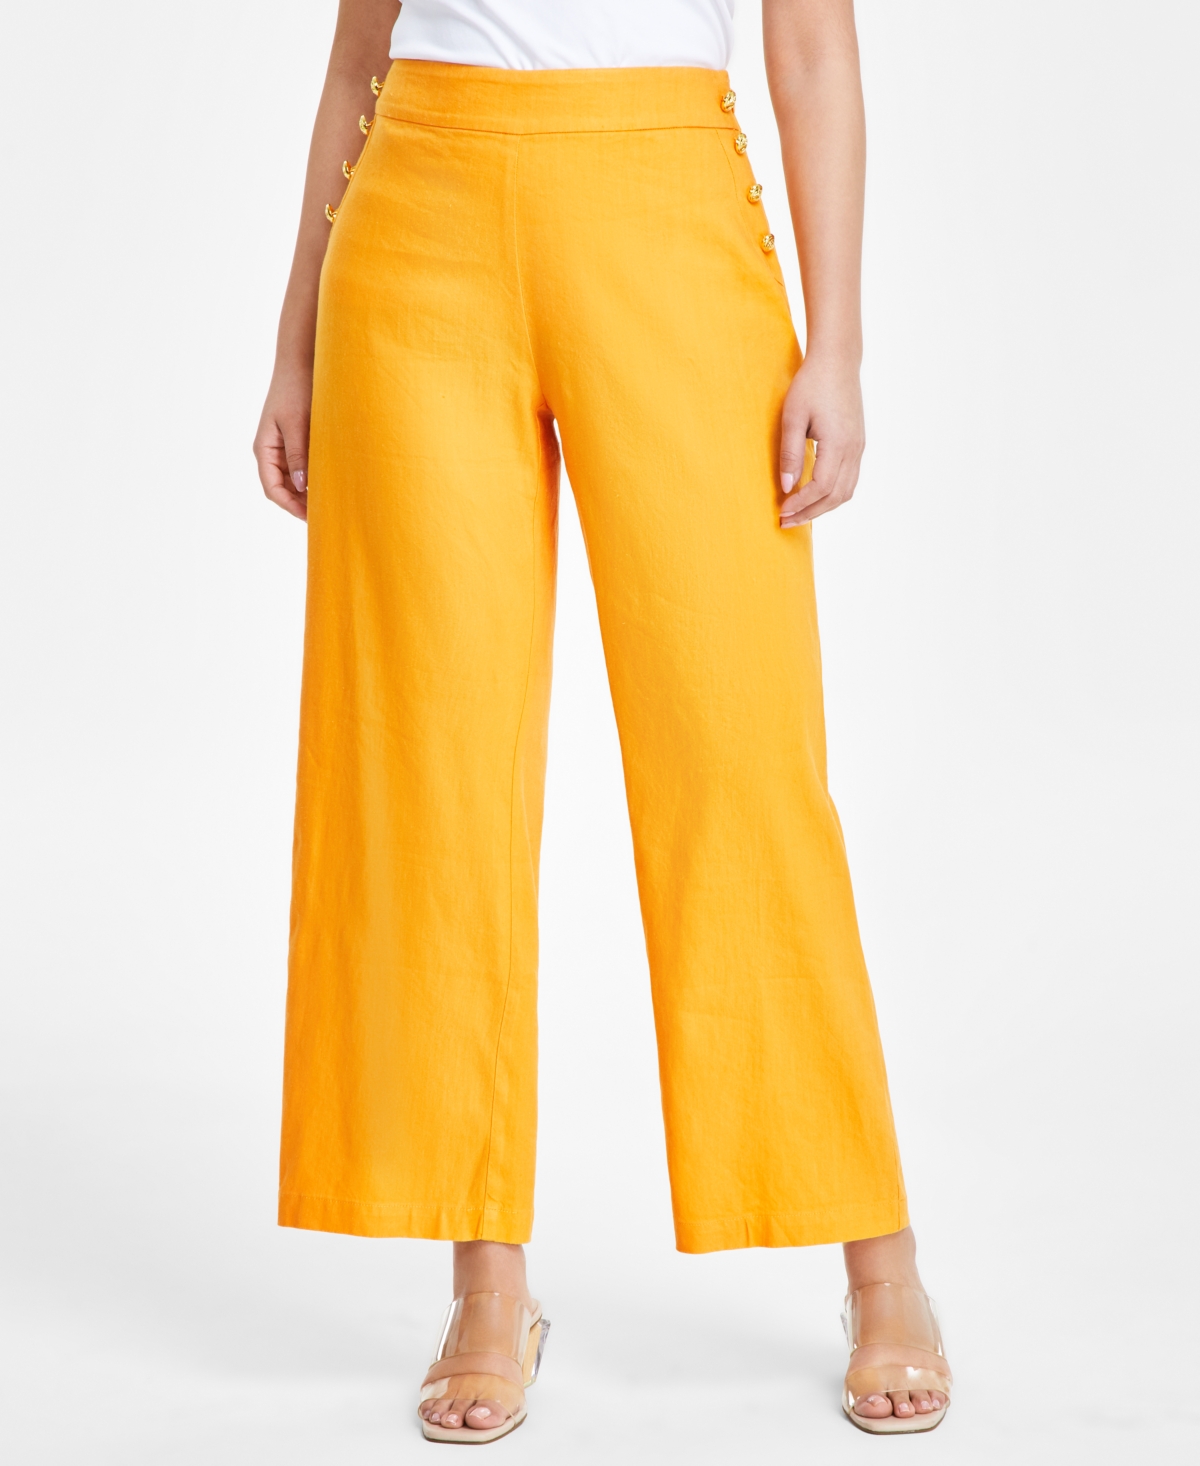 Petite Linen-Blend High-Rise Wide-Leg Pants, Created for Macy's - Mango Daquiri